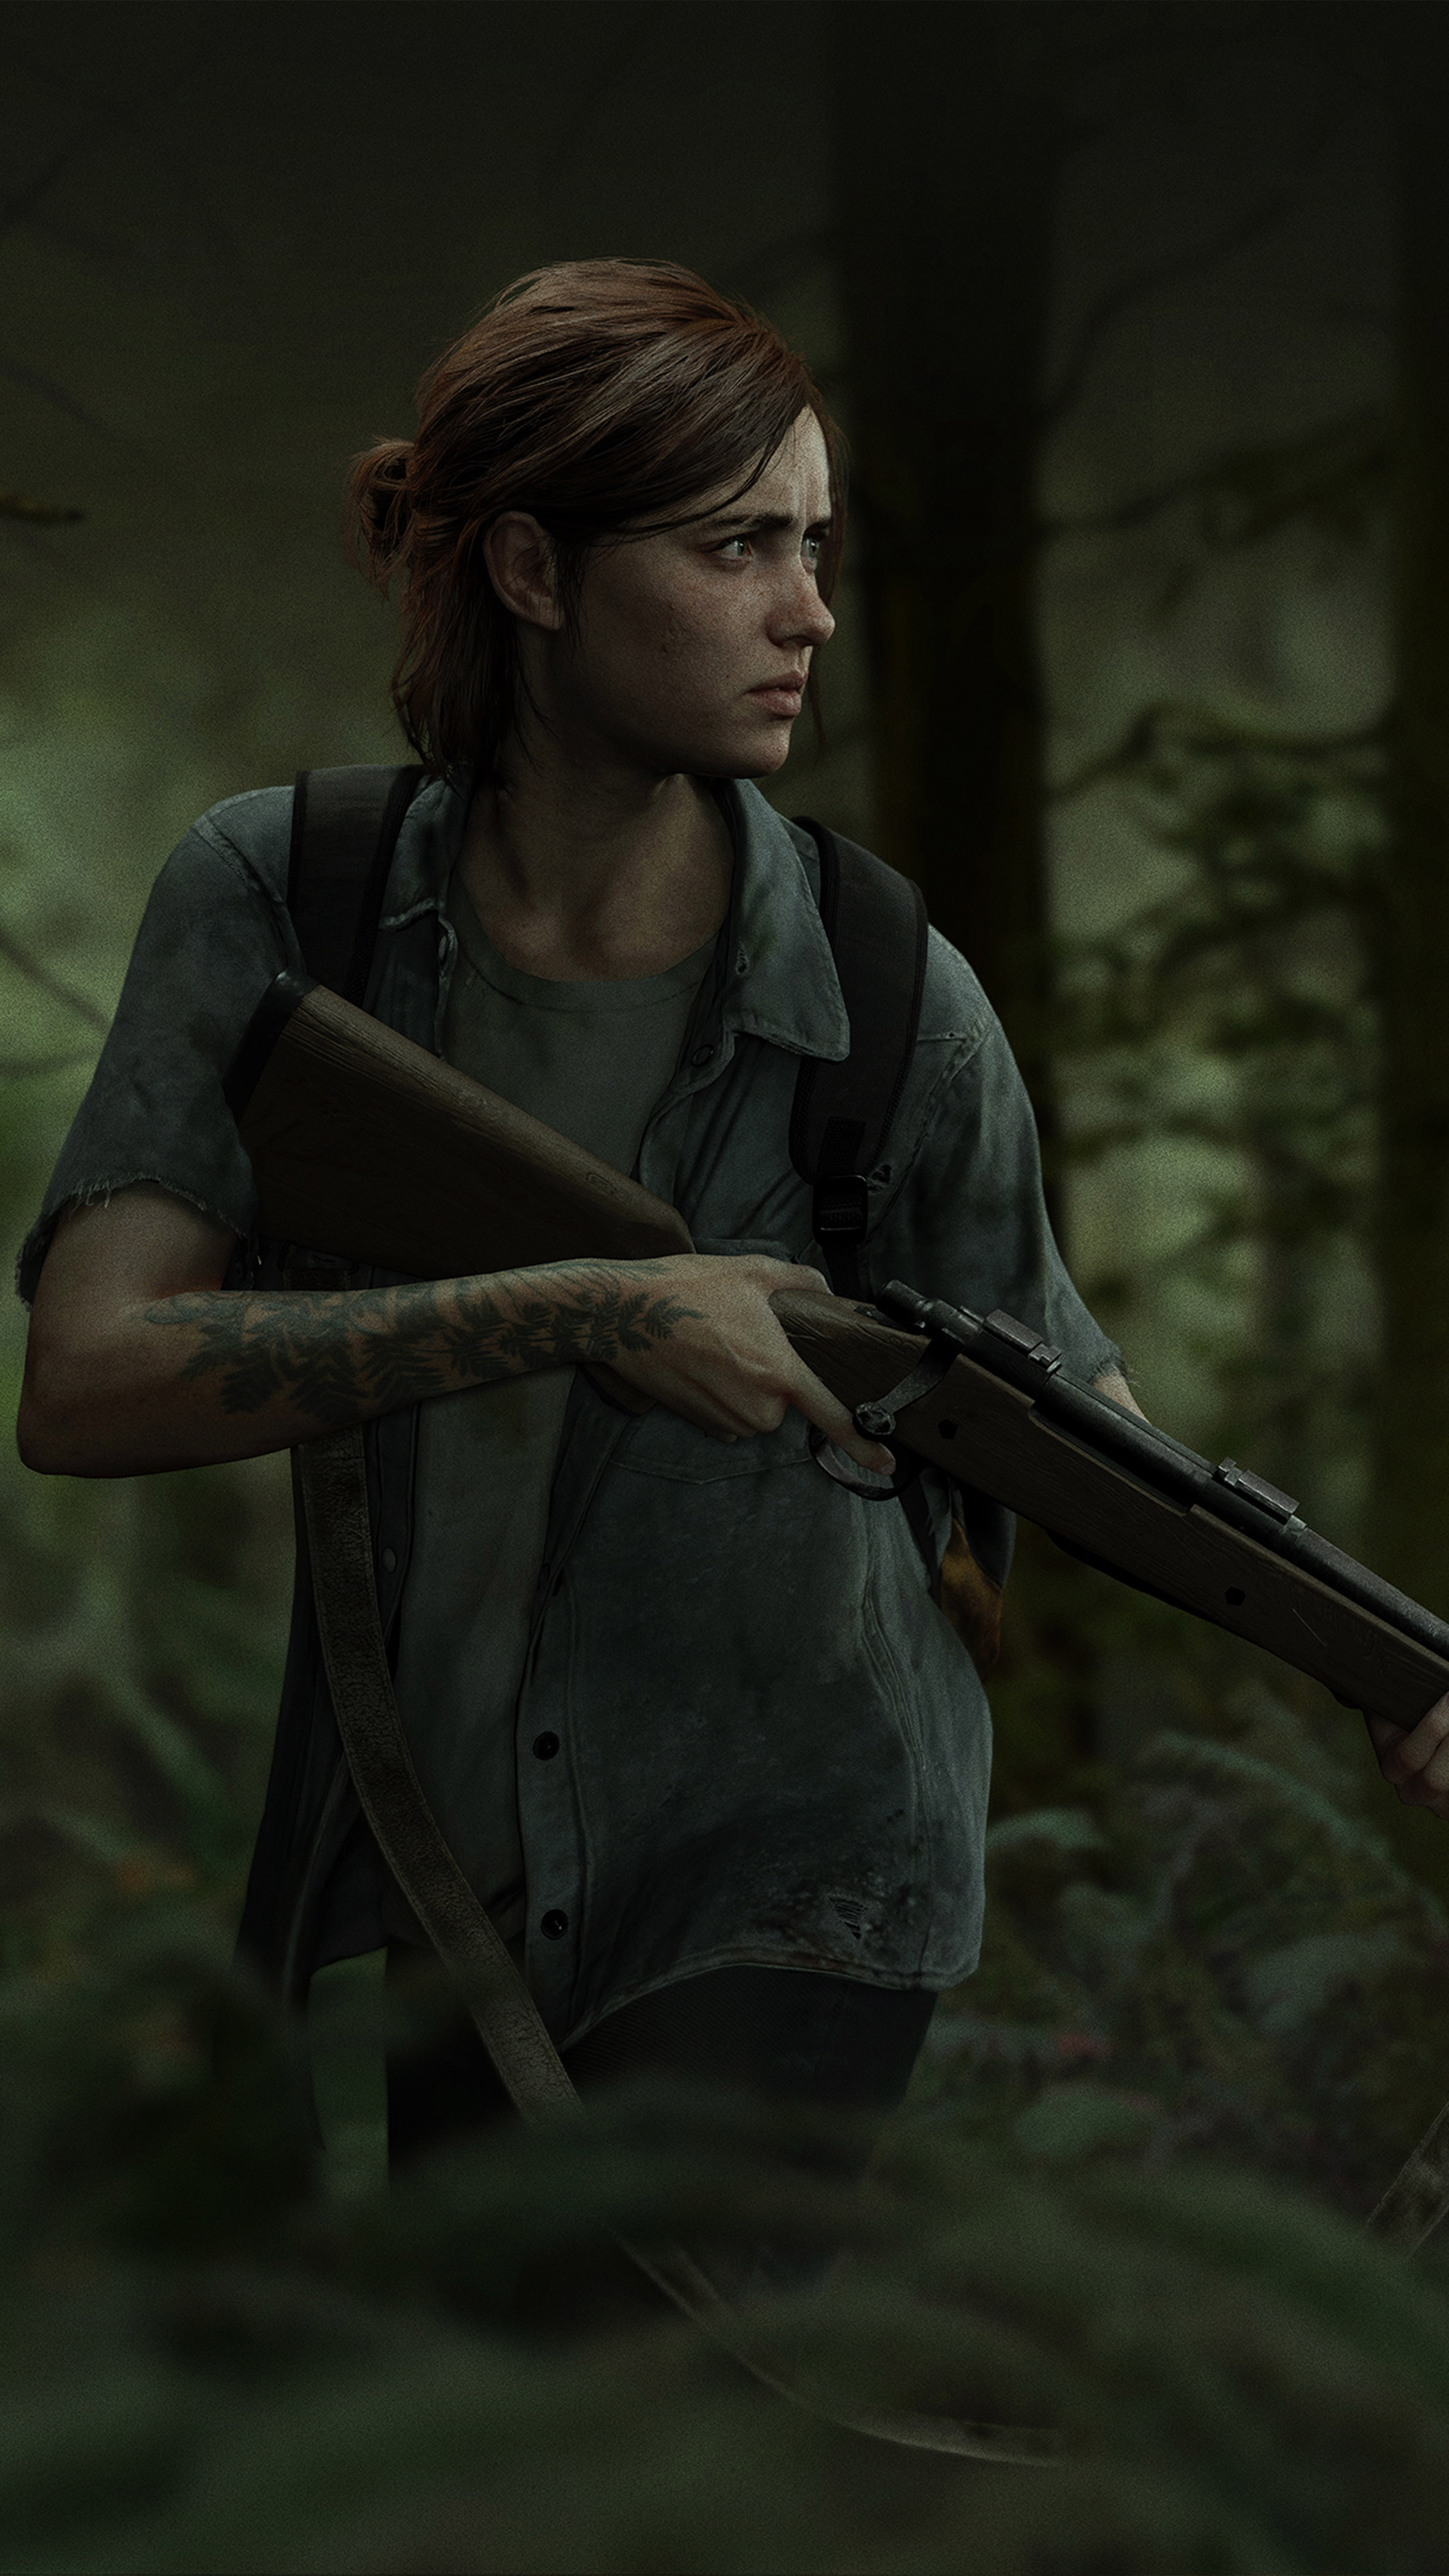 Ellie Holding Gun The Last of Us II 4K Ultra HD Mobile Wallpaper